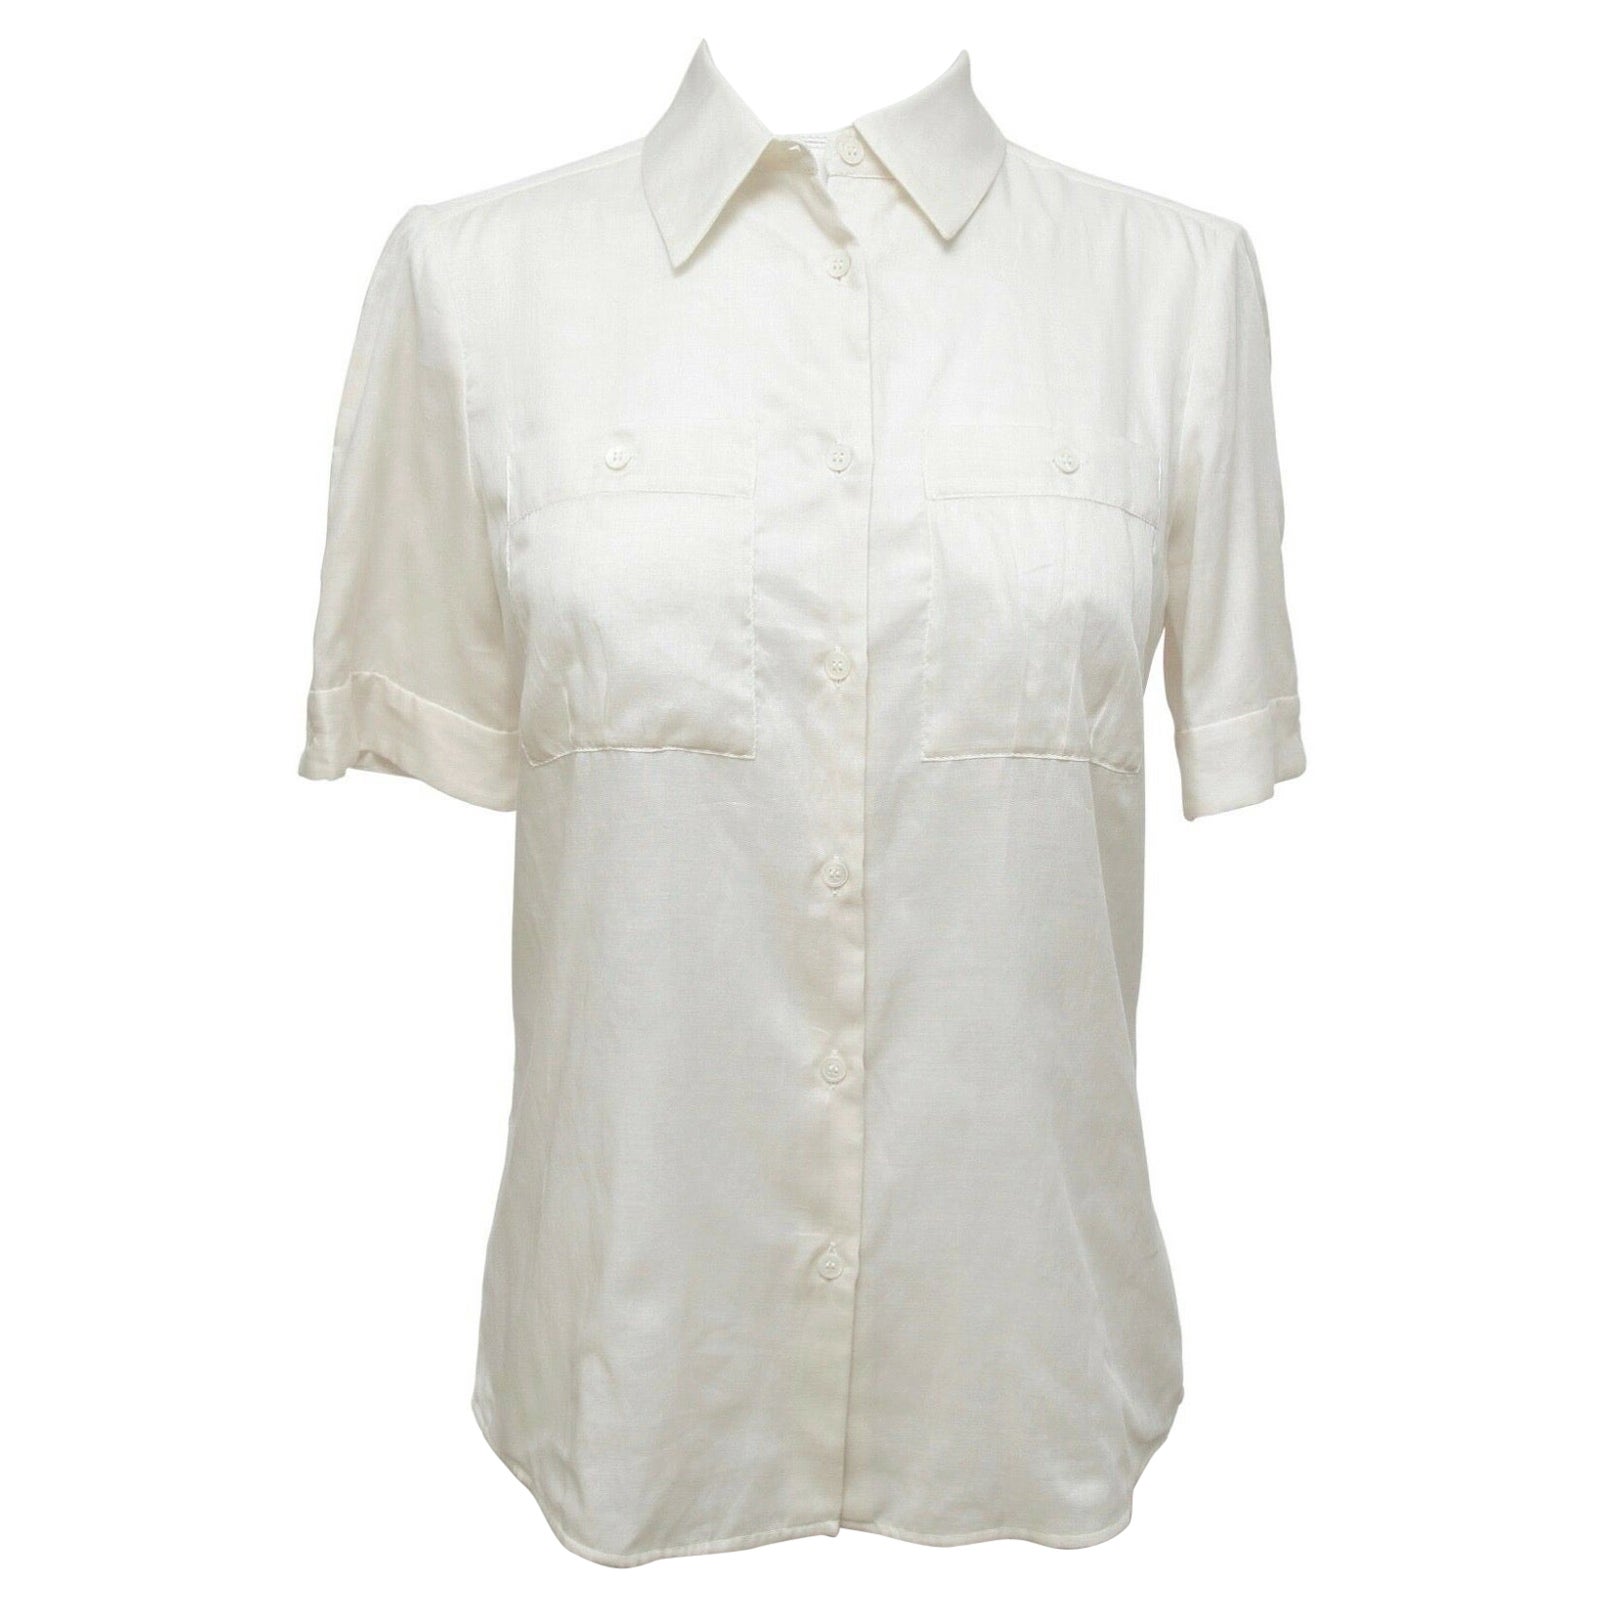 MIU MIU Blouse Shirt Top Button Down Cotton Ivory Short Sleeve Sz 42 For Sale